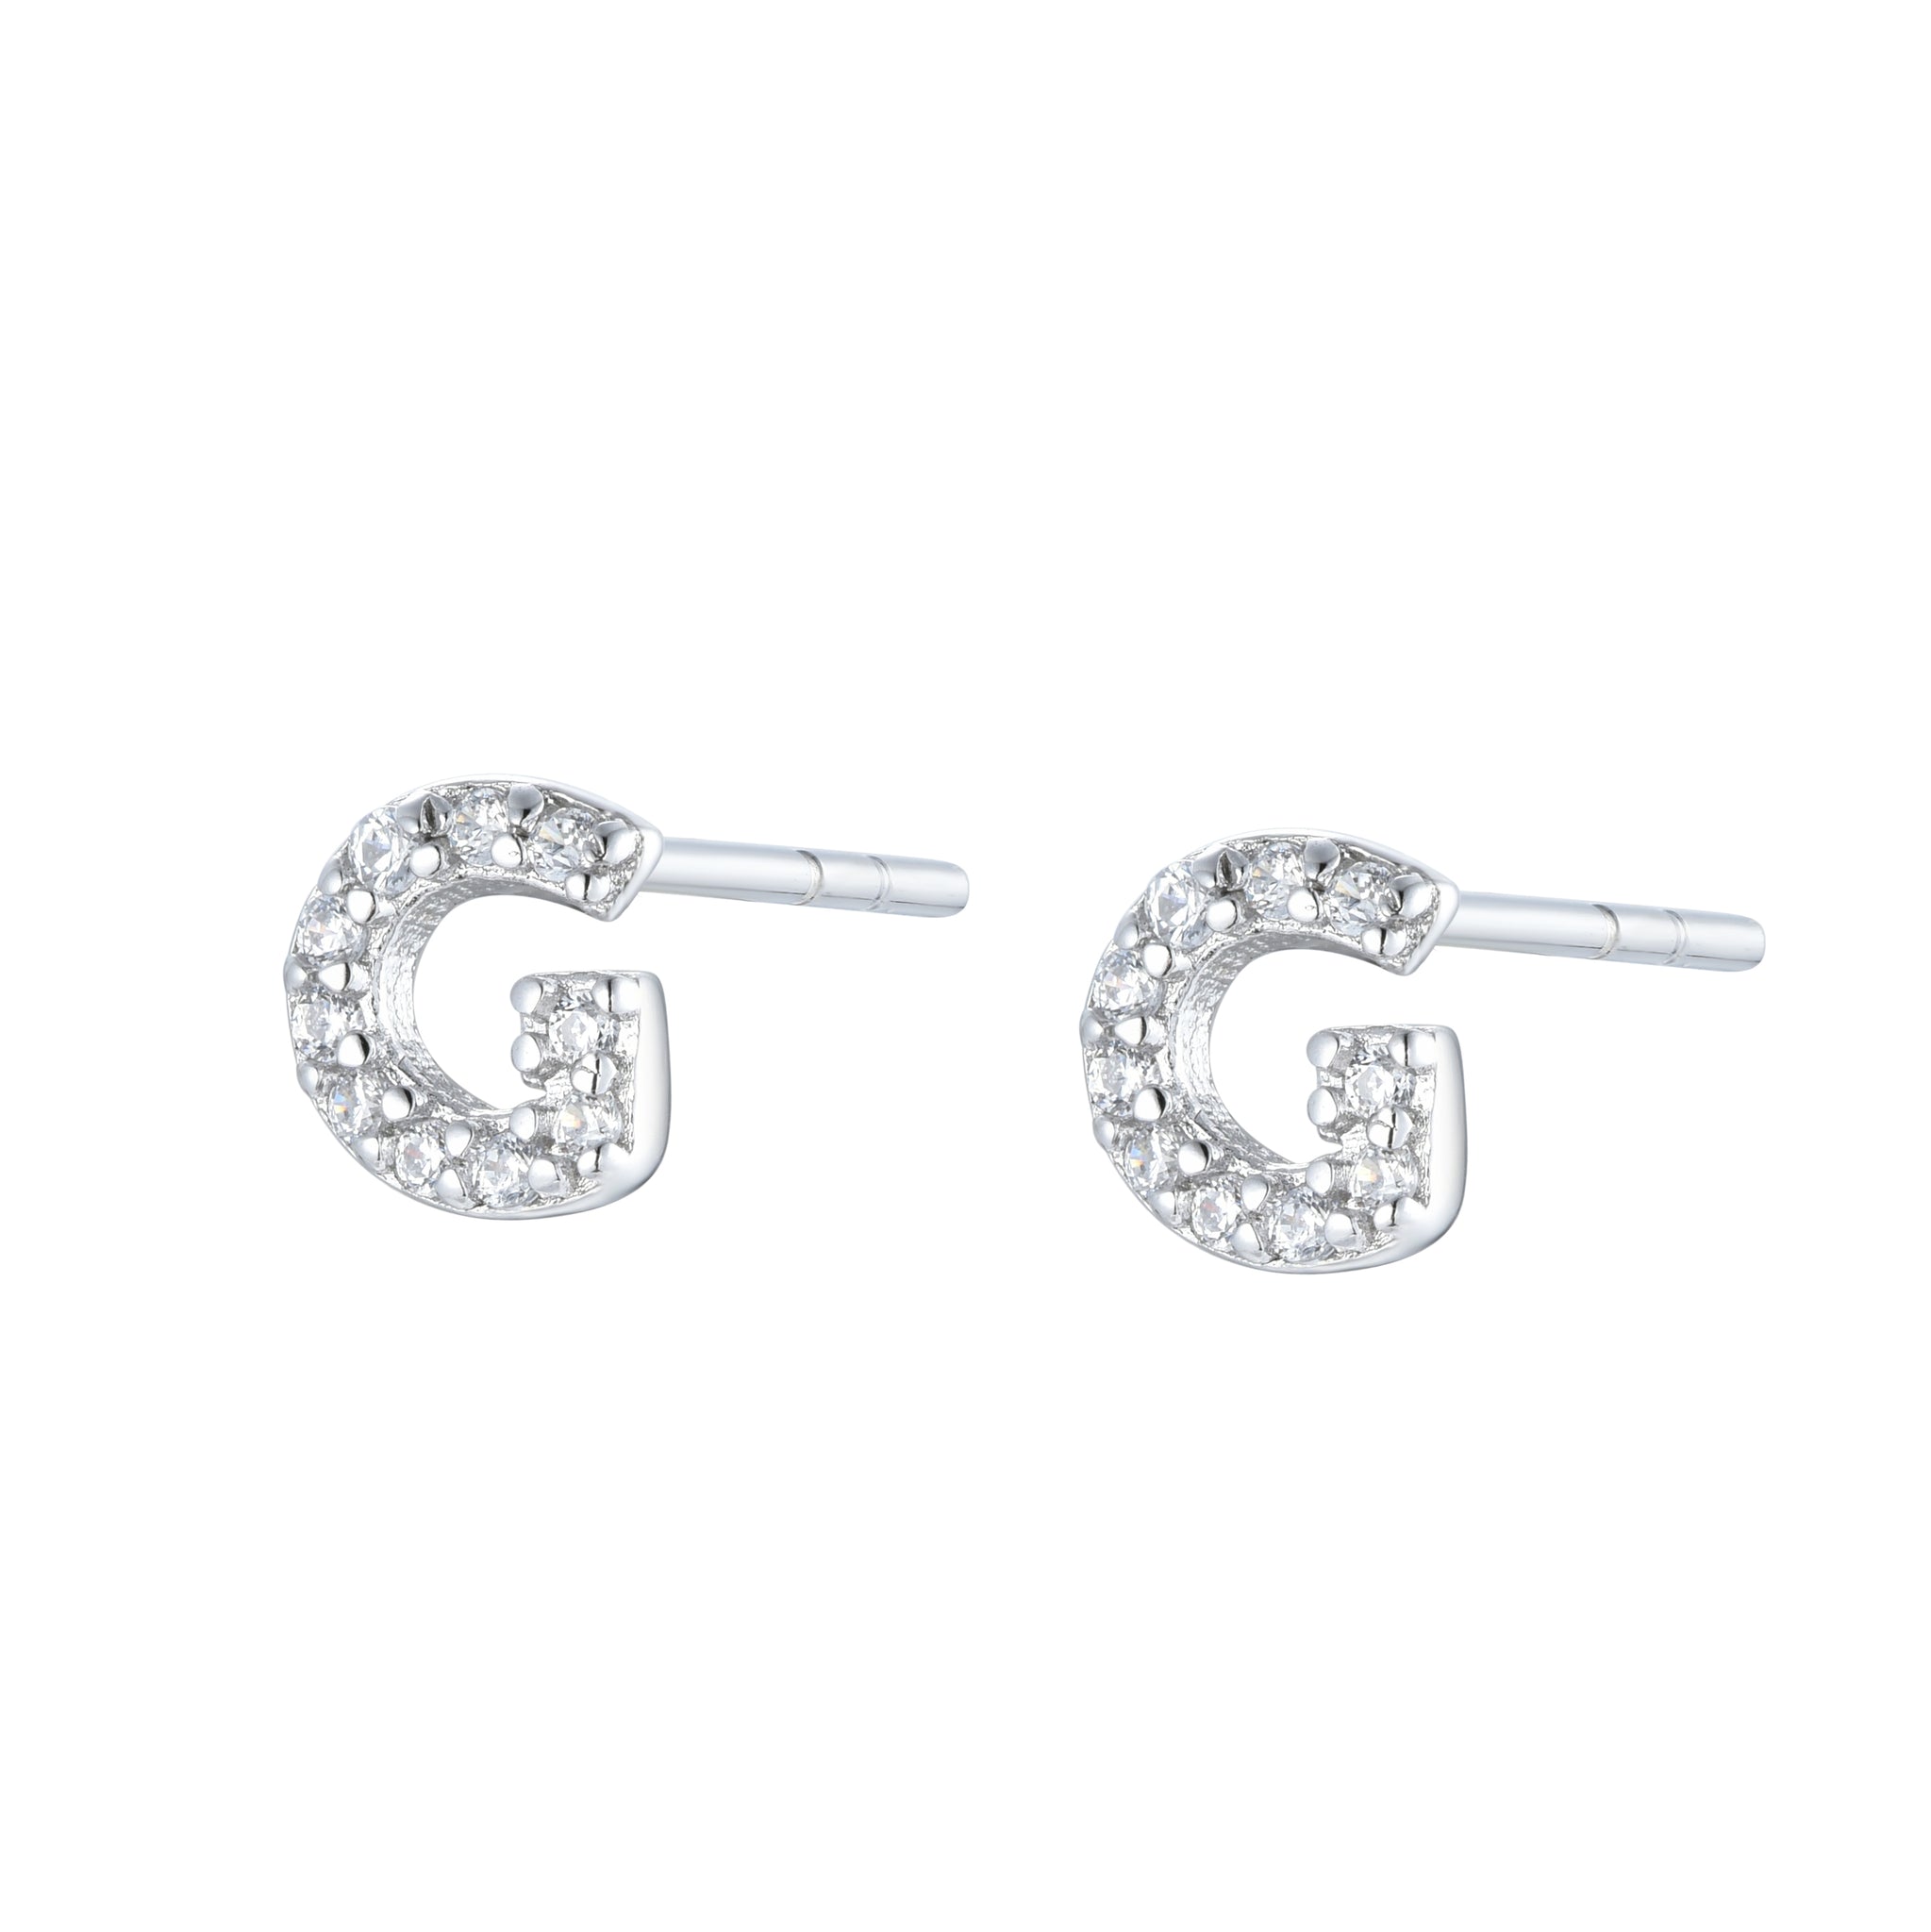 EG-26/S - Initial Stud Earrings (Sold as a single stud)